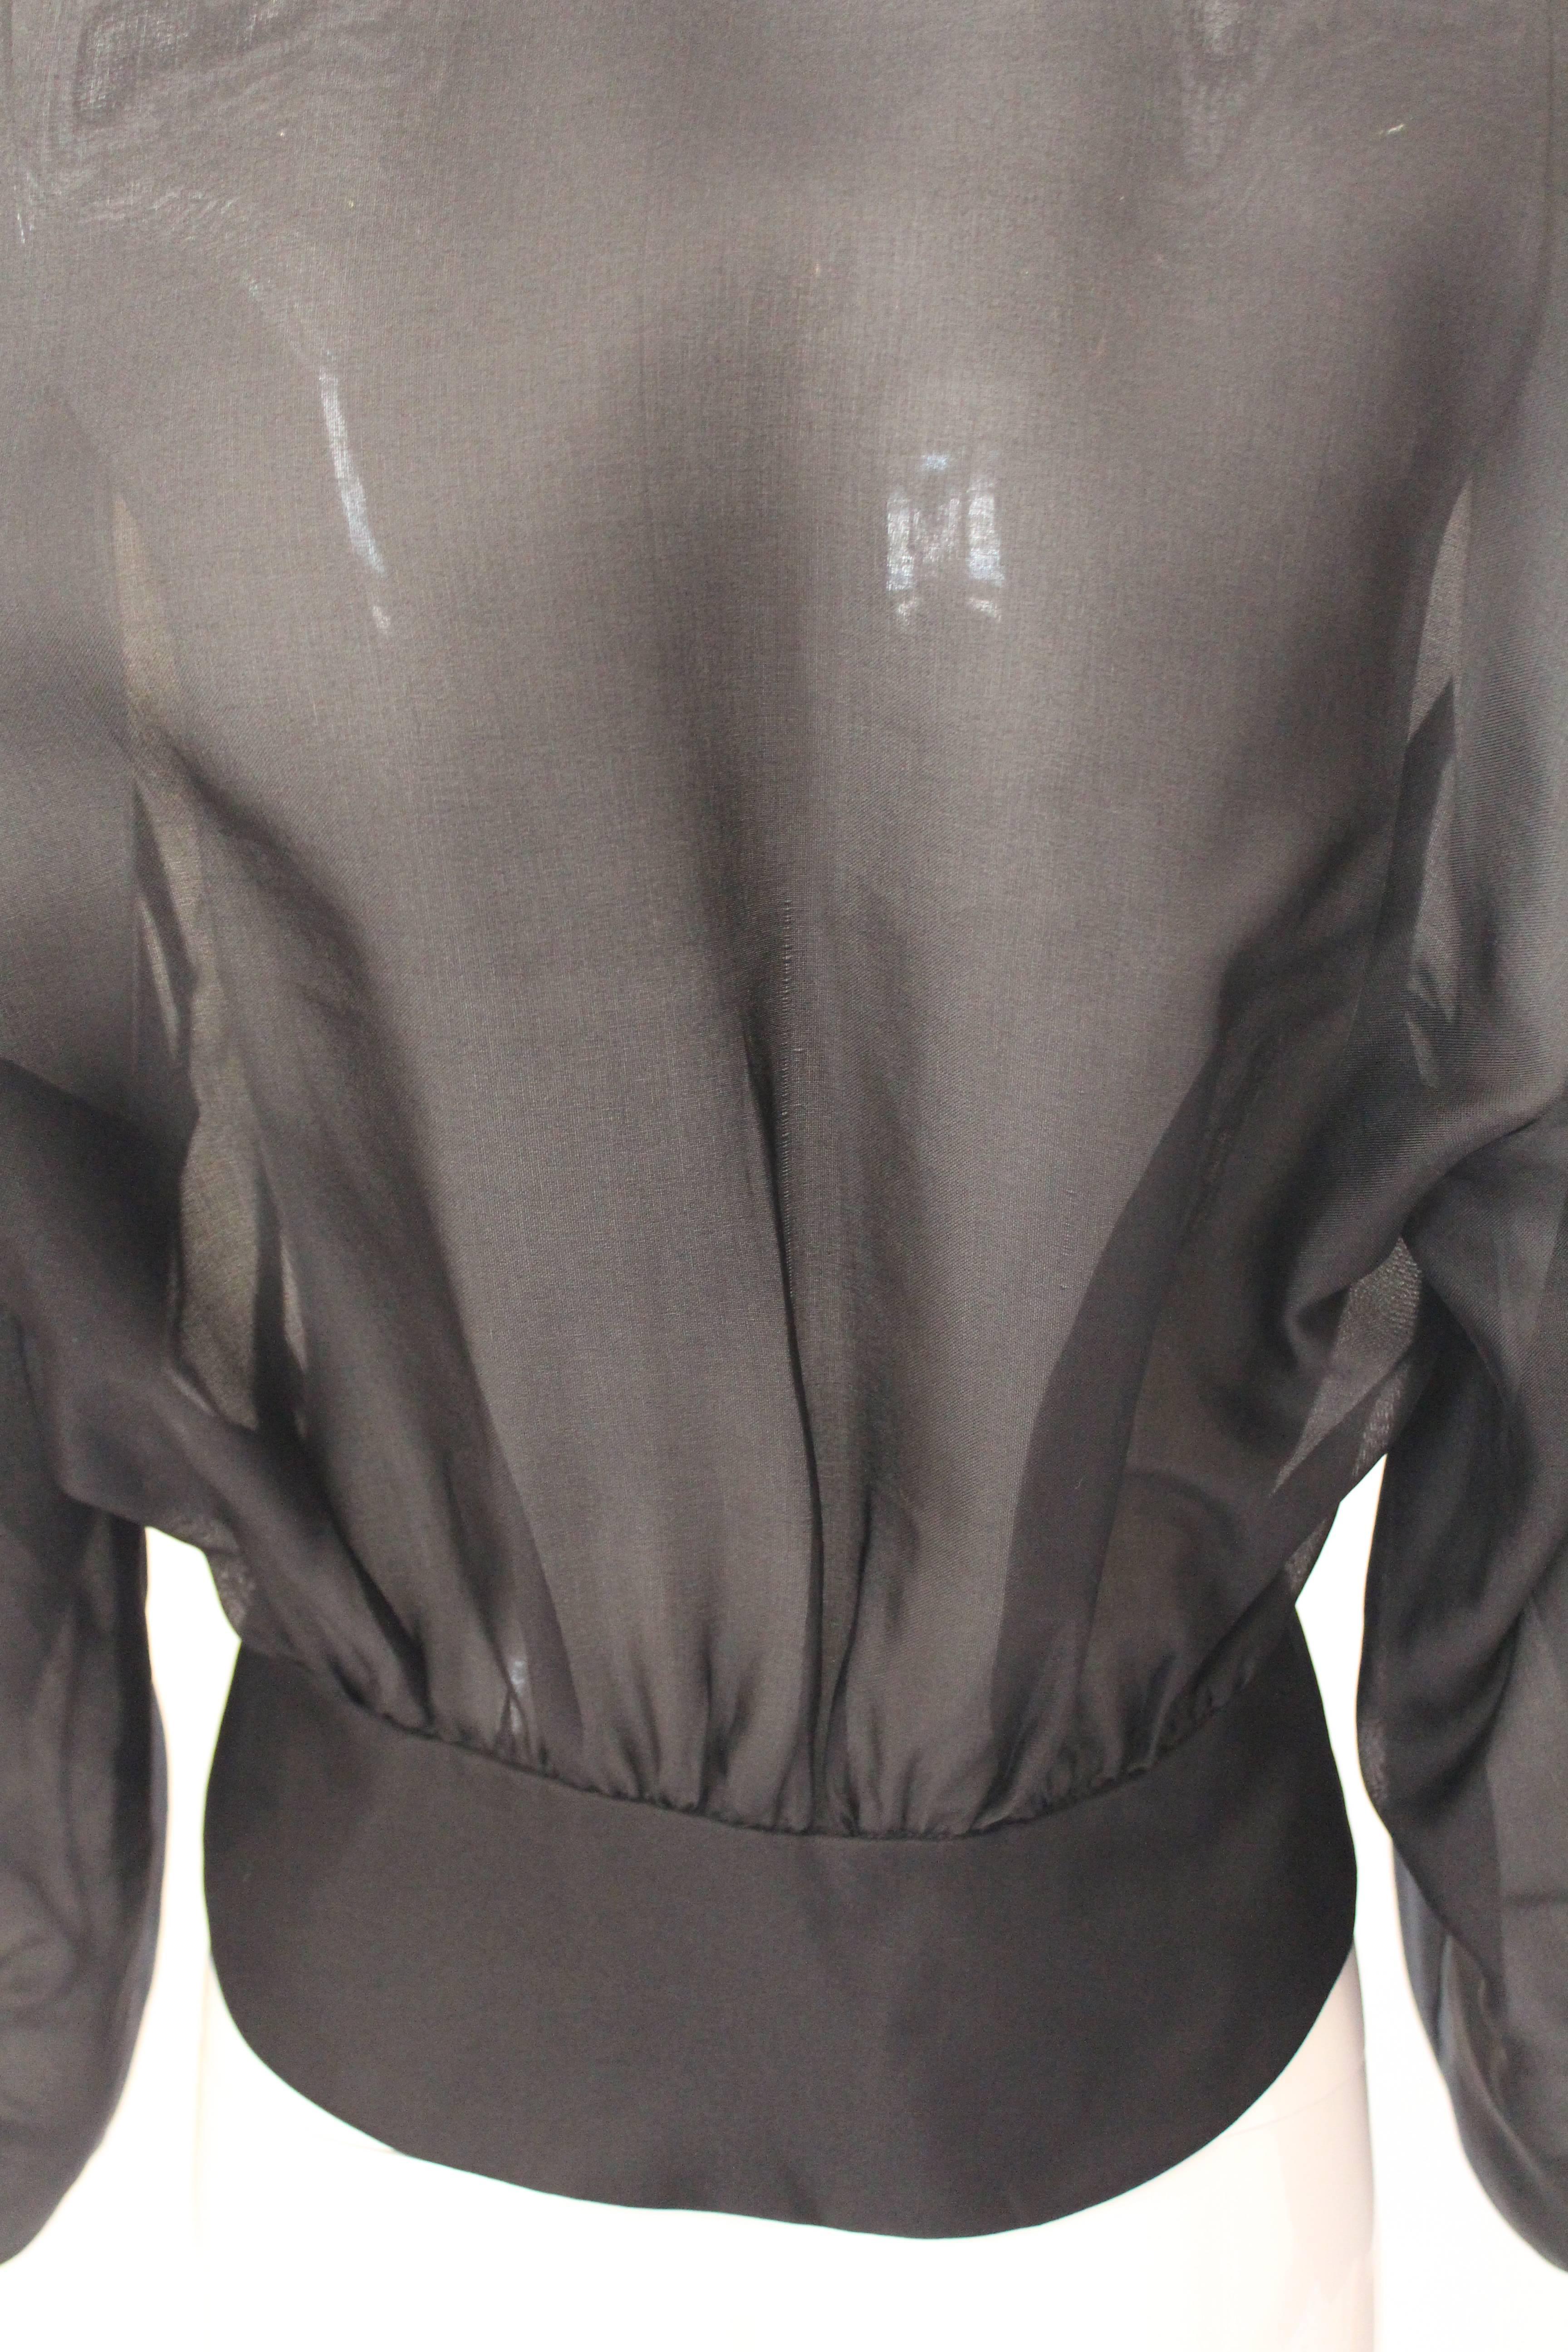 Yves Saint Laurent Rive Gauche Black Sheer Blouse Jacket  3